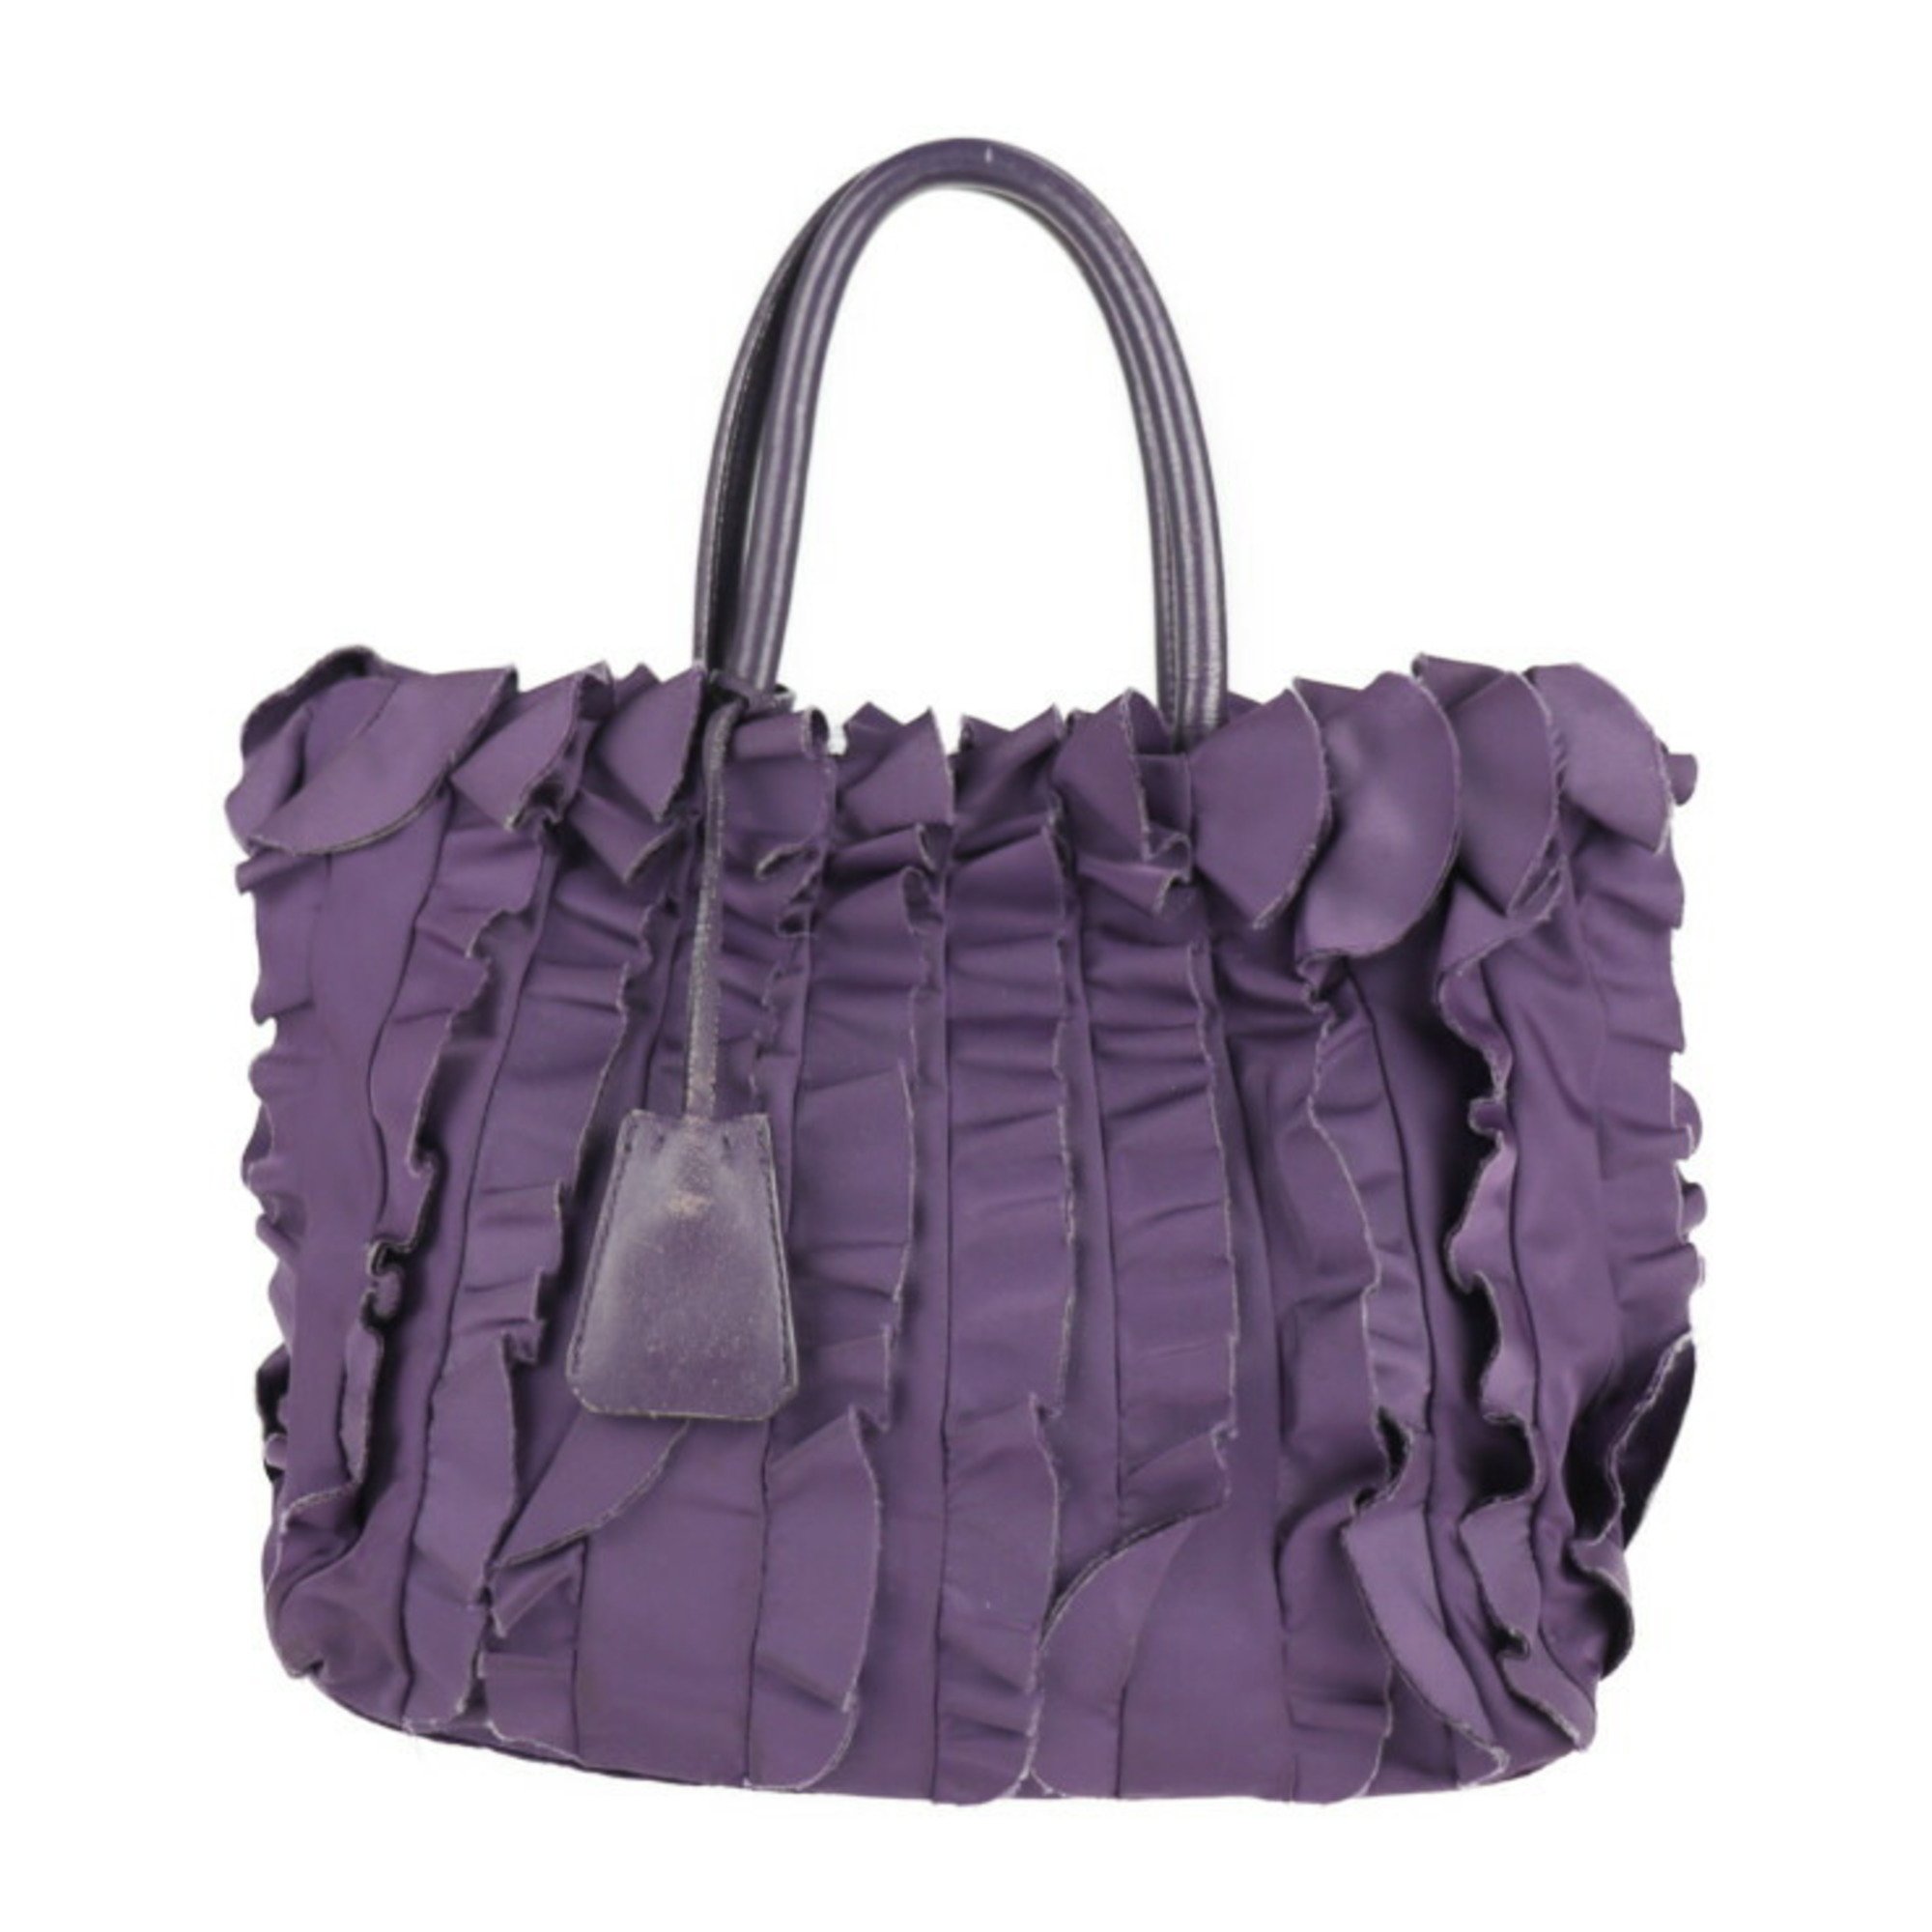 PRADA Prada handbag BN1728 nylon violet frill tote bag